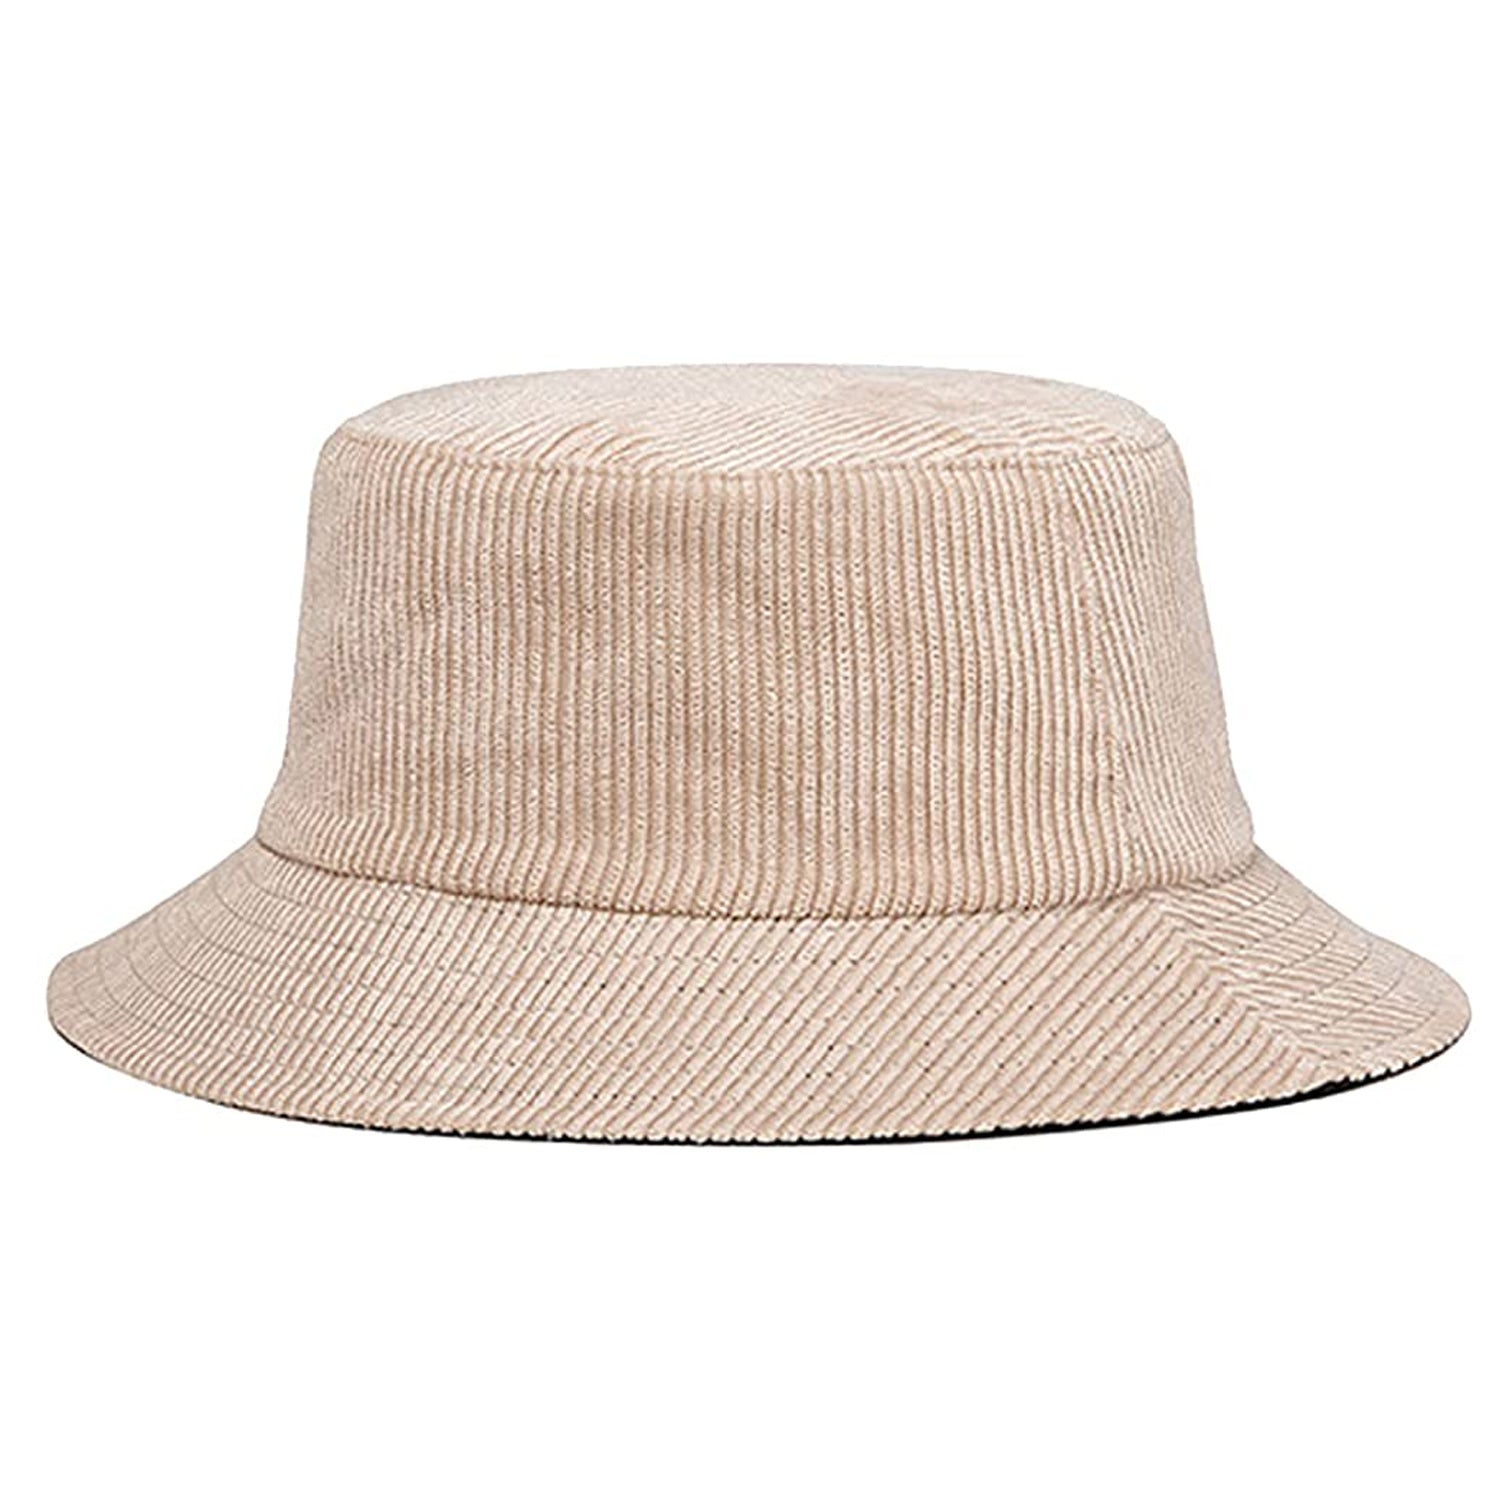 TOPONE ACCESSORIES LIMITED Custom Cotton Corduroy Reversible Sun Fishing Bucket Hat Topone Accessories Ltd. 